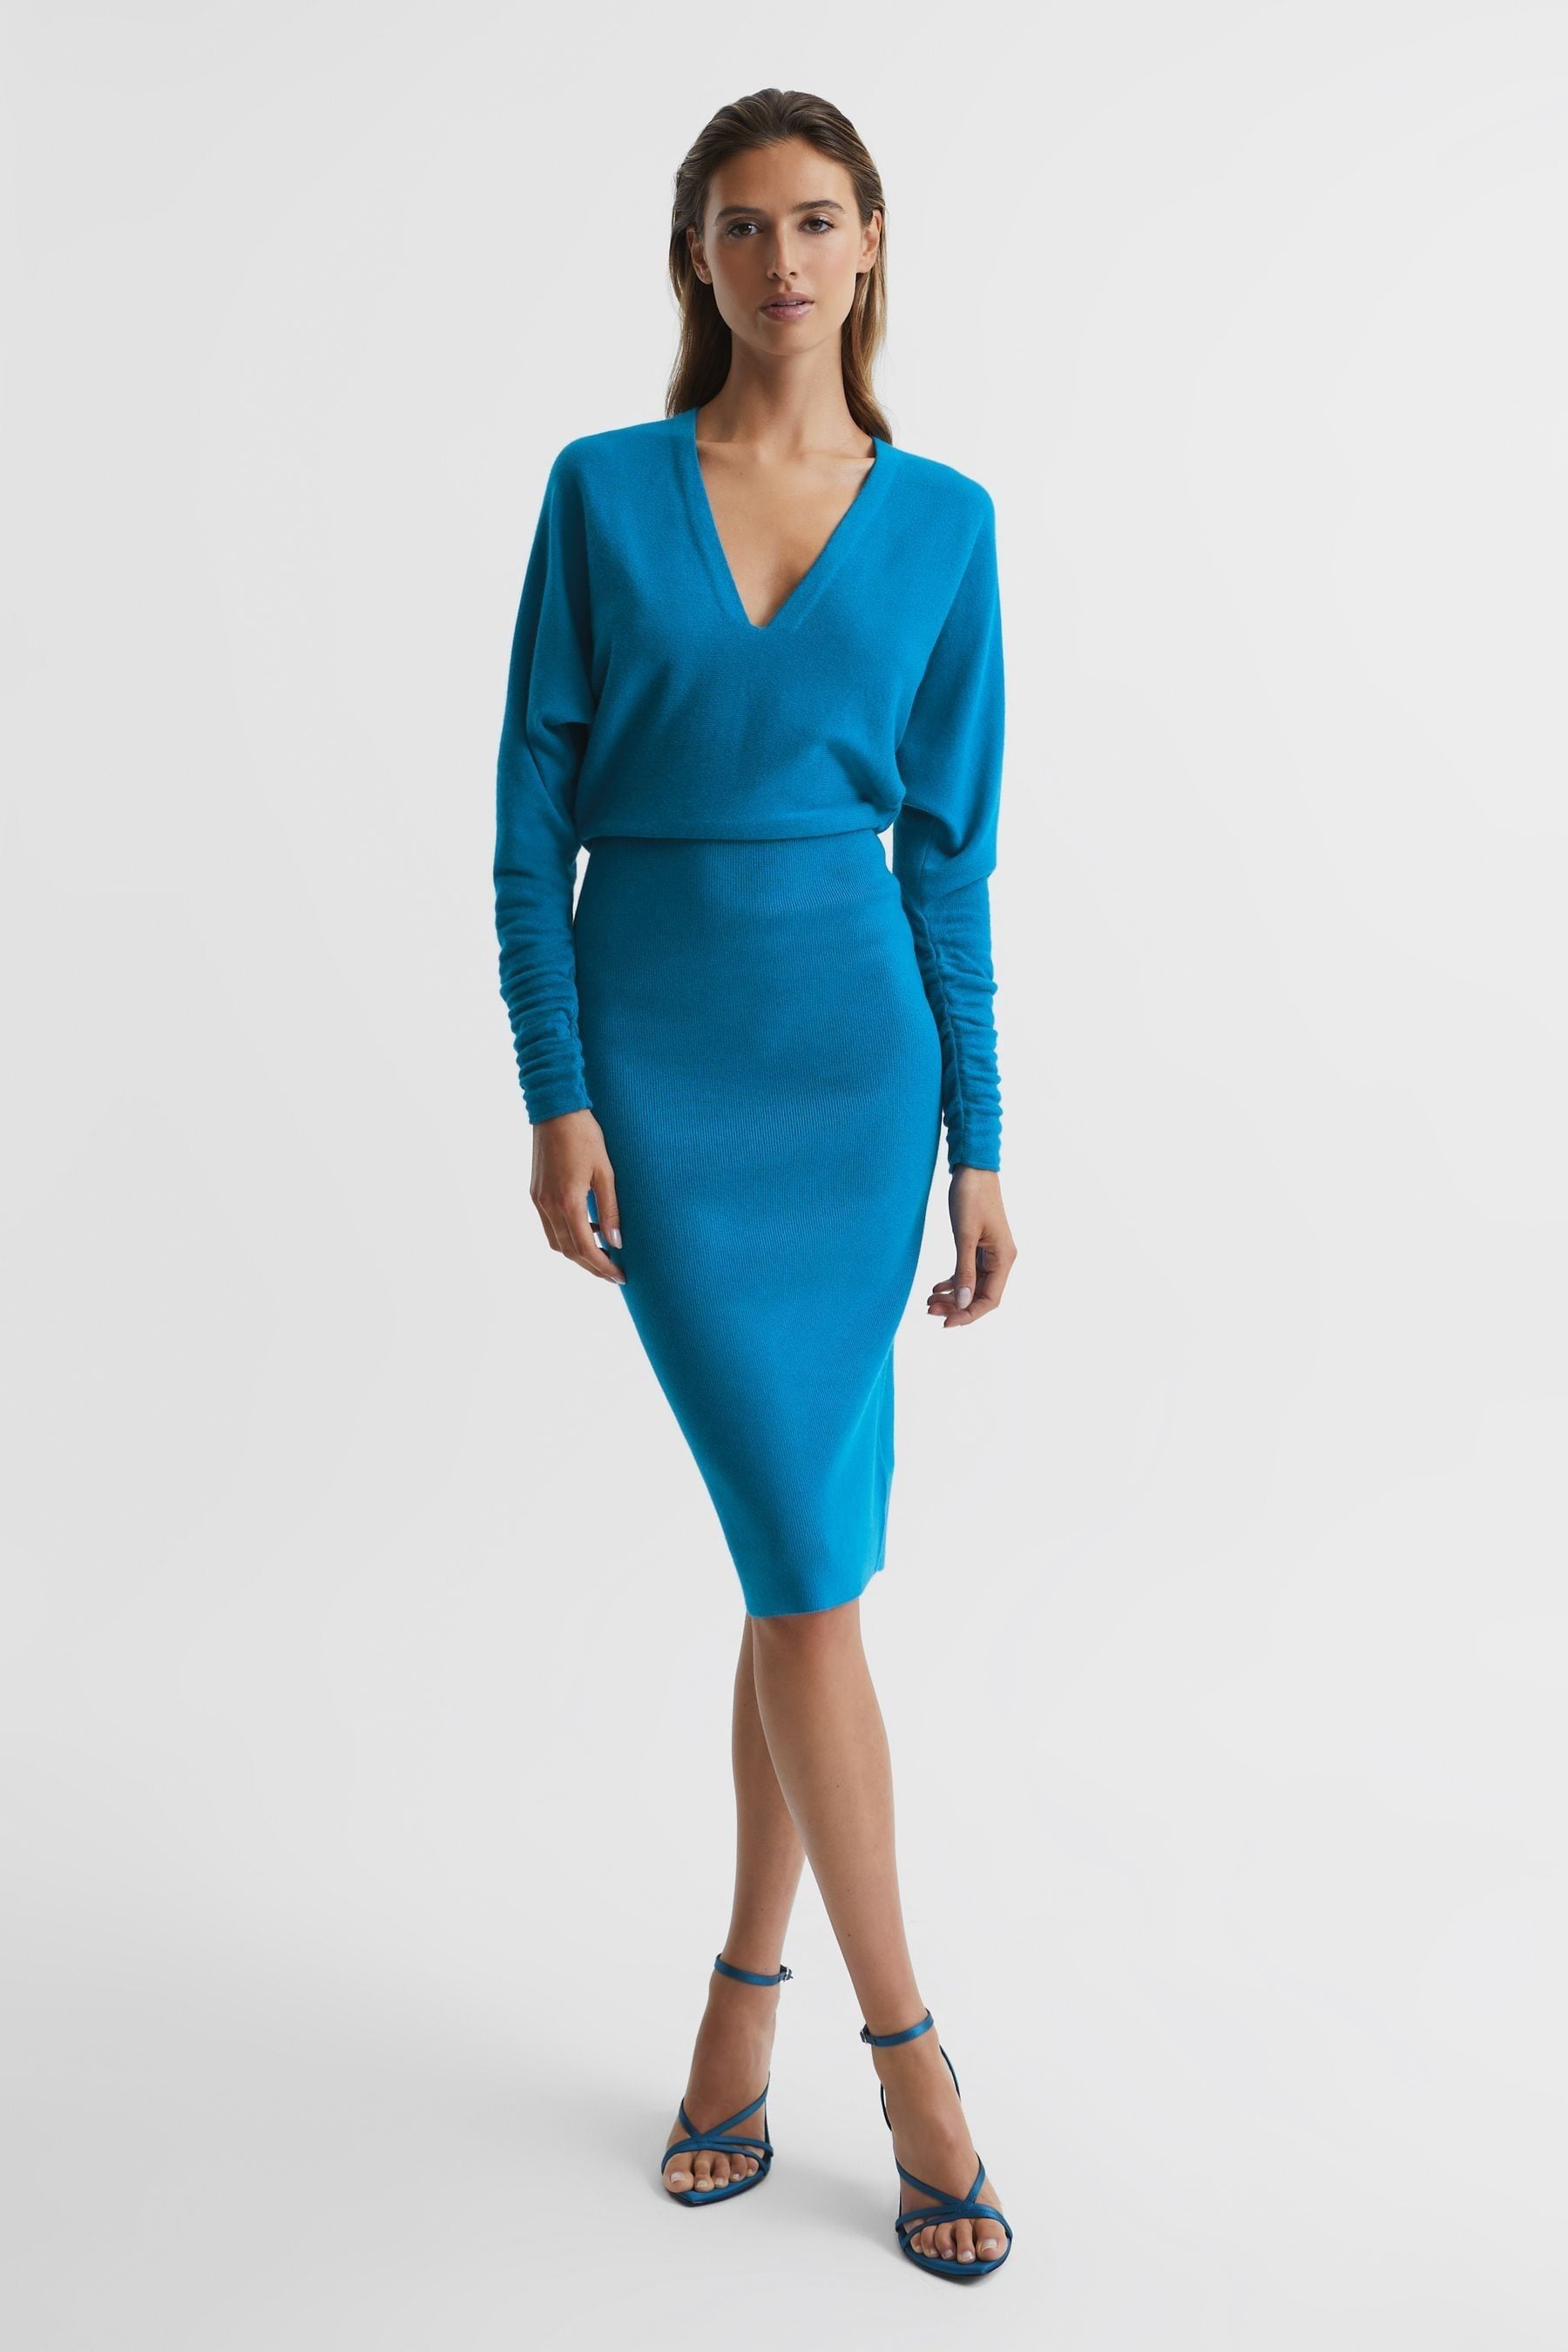 Reiss Jenna - Blue Wool Blend Ruched Sleeve Midi Dress, S